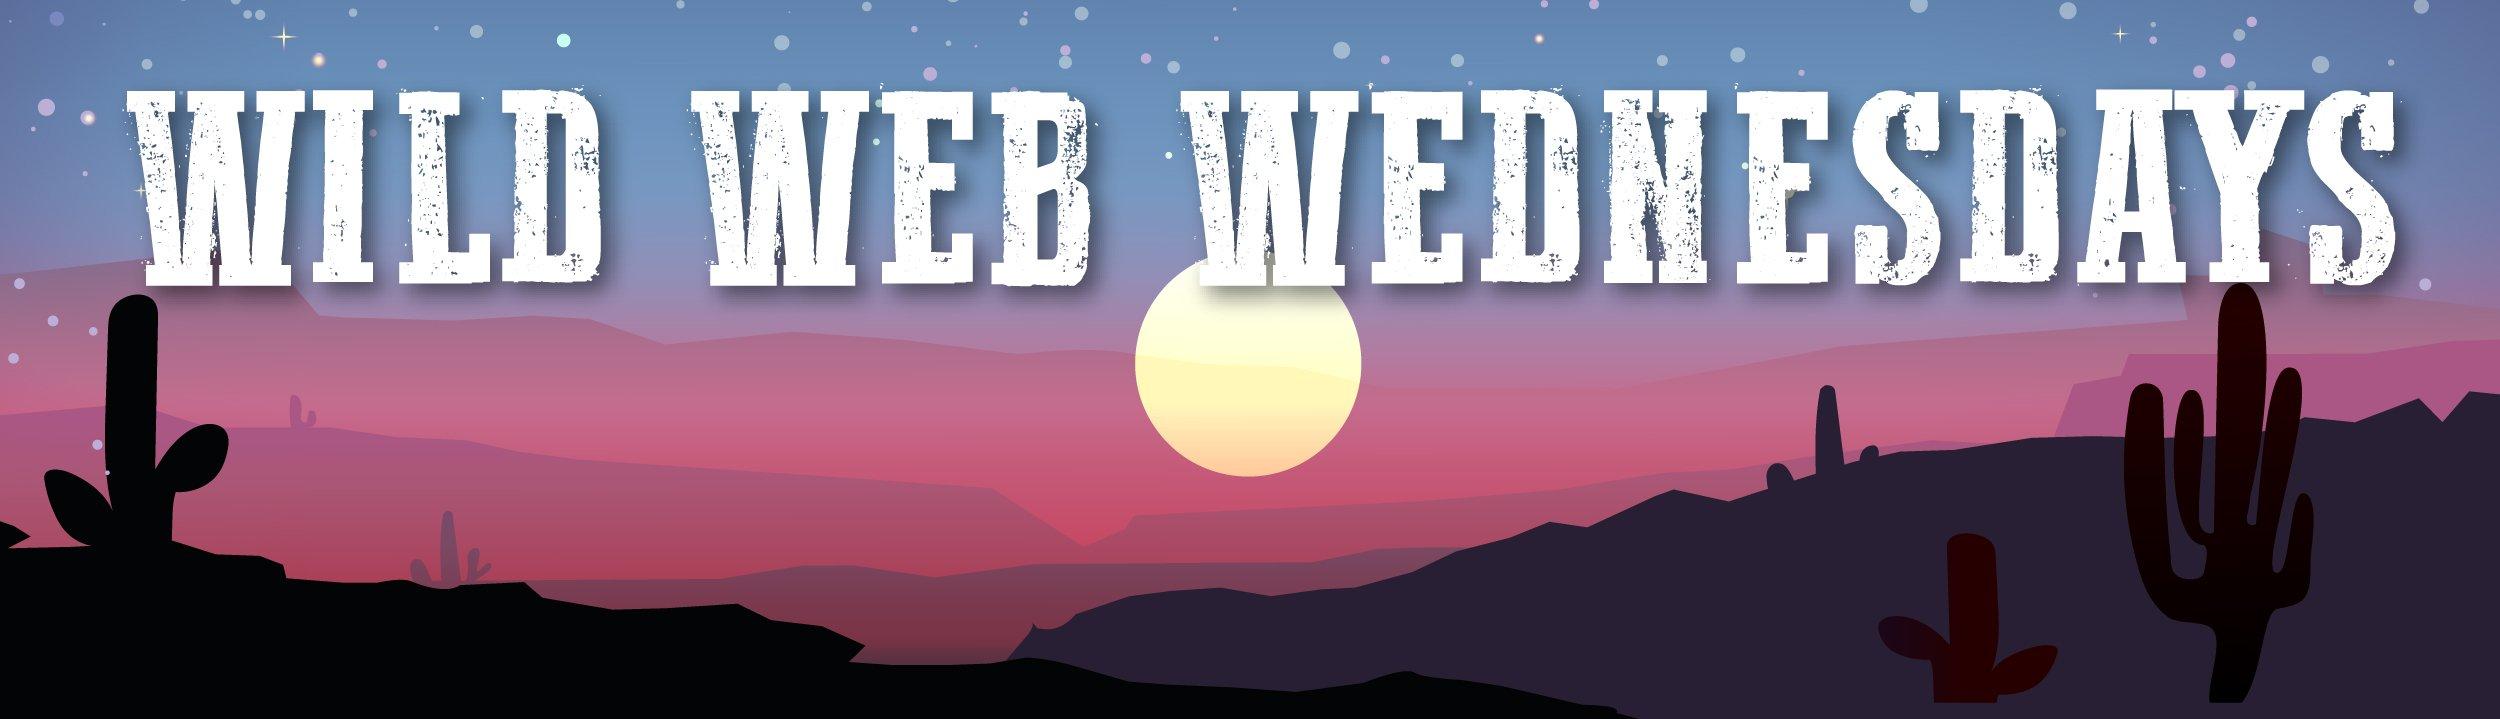 Wild Web Wednesday